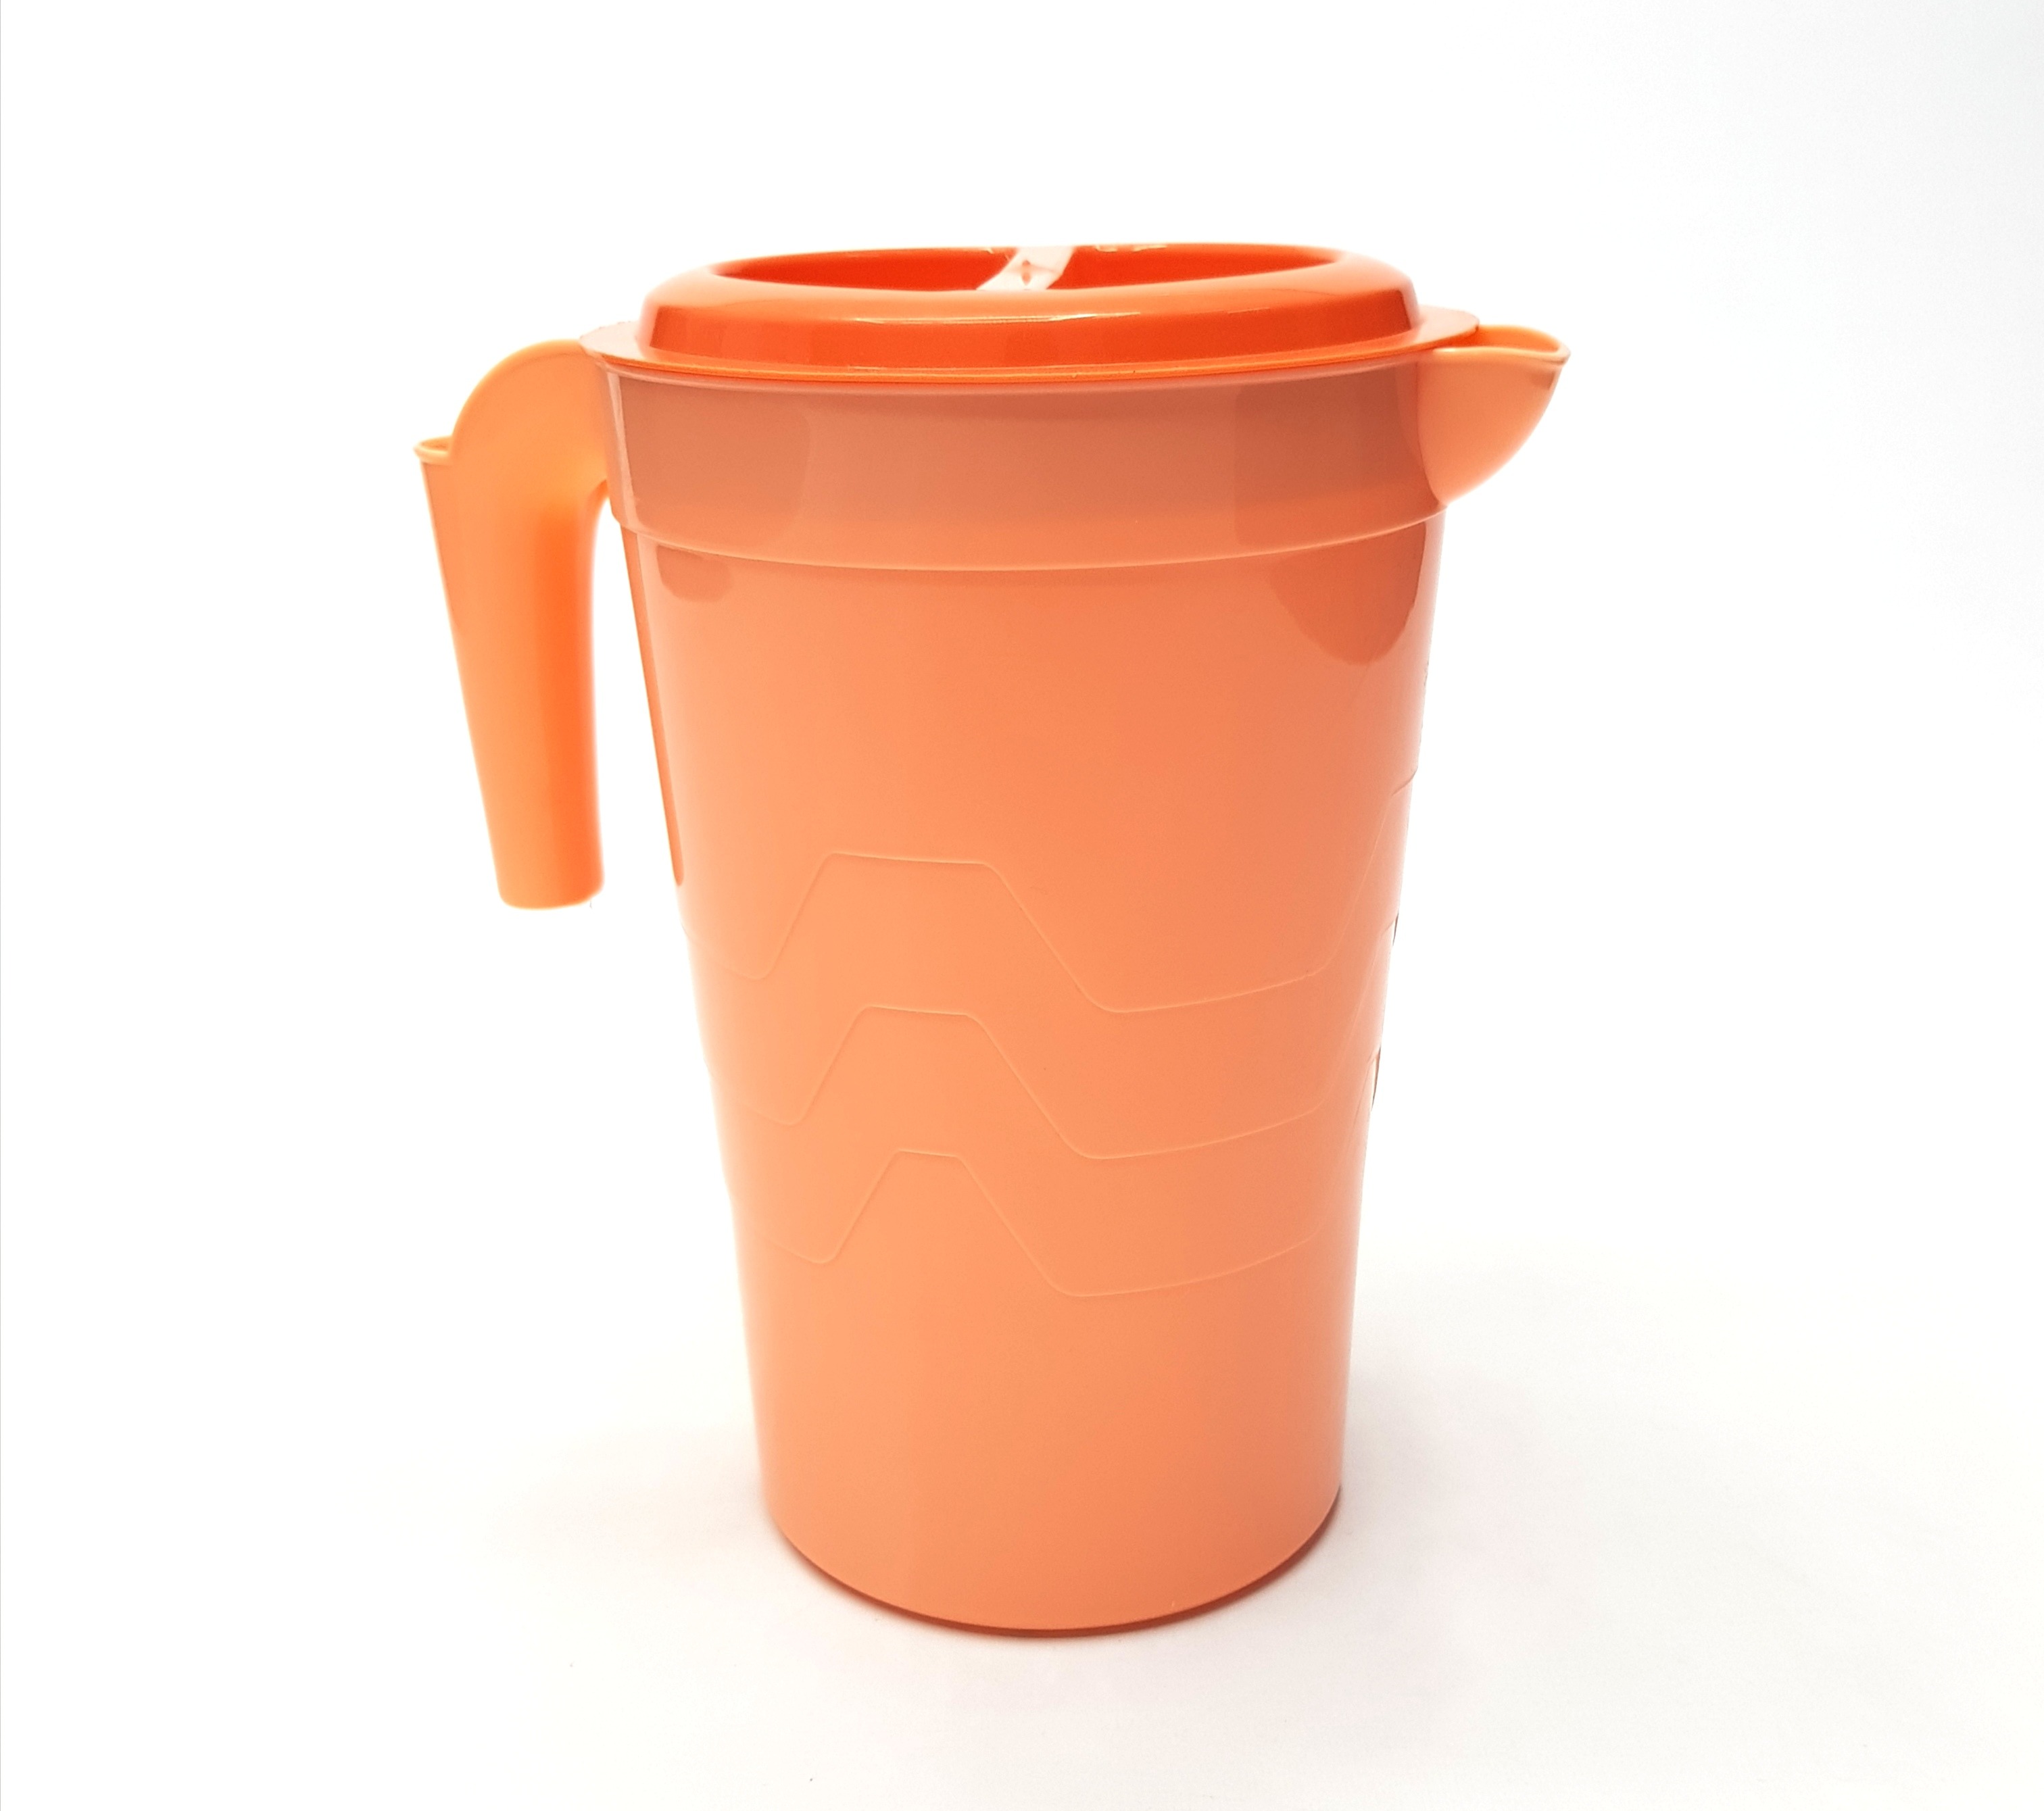 Plastic pitcher